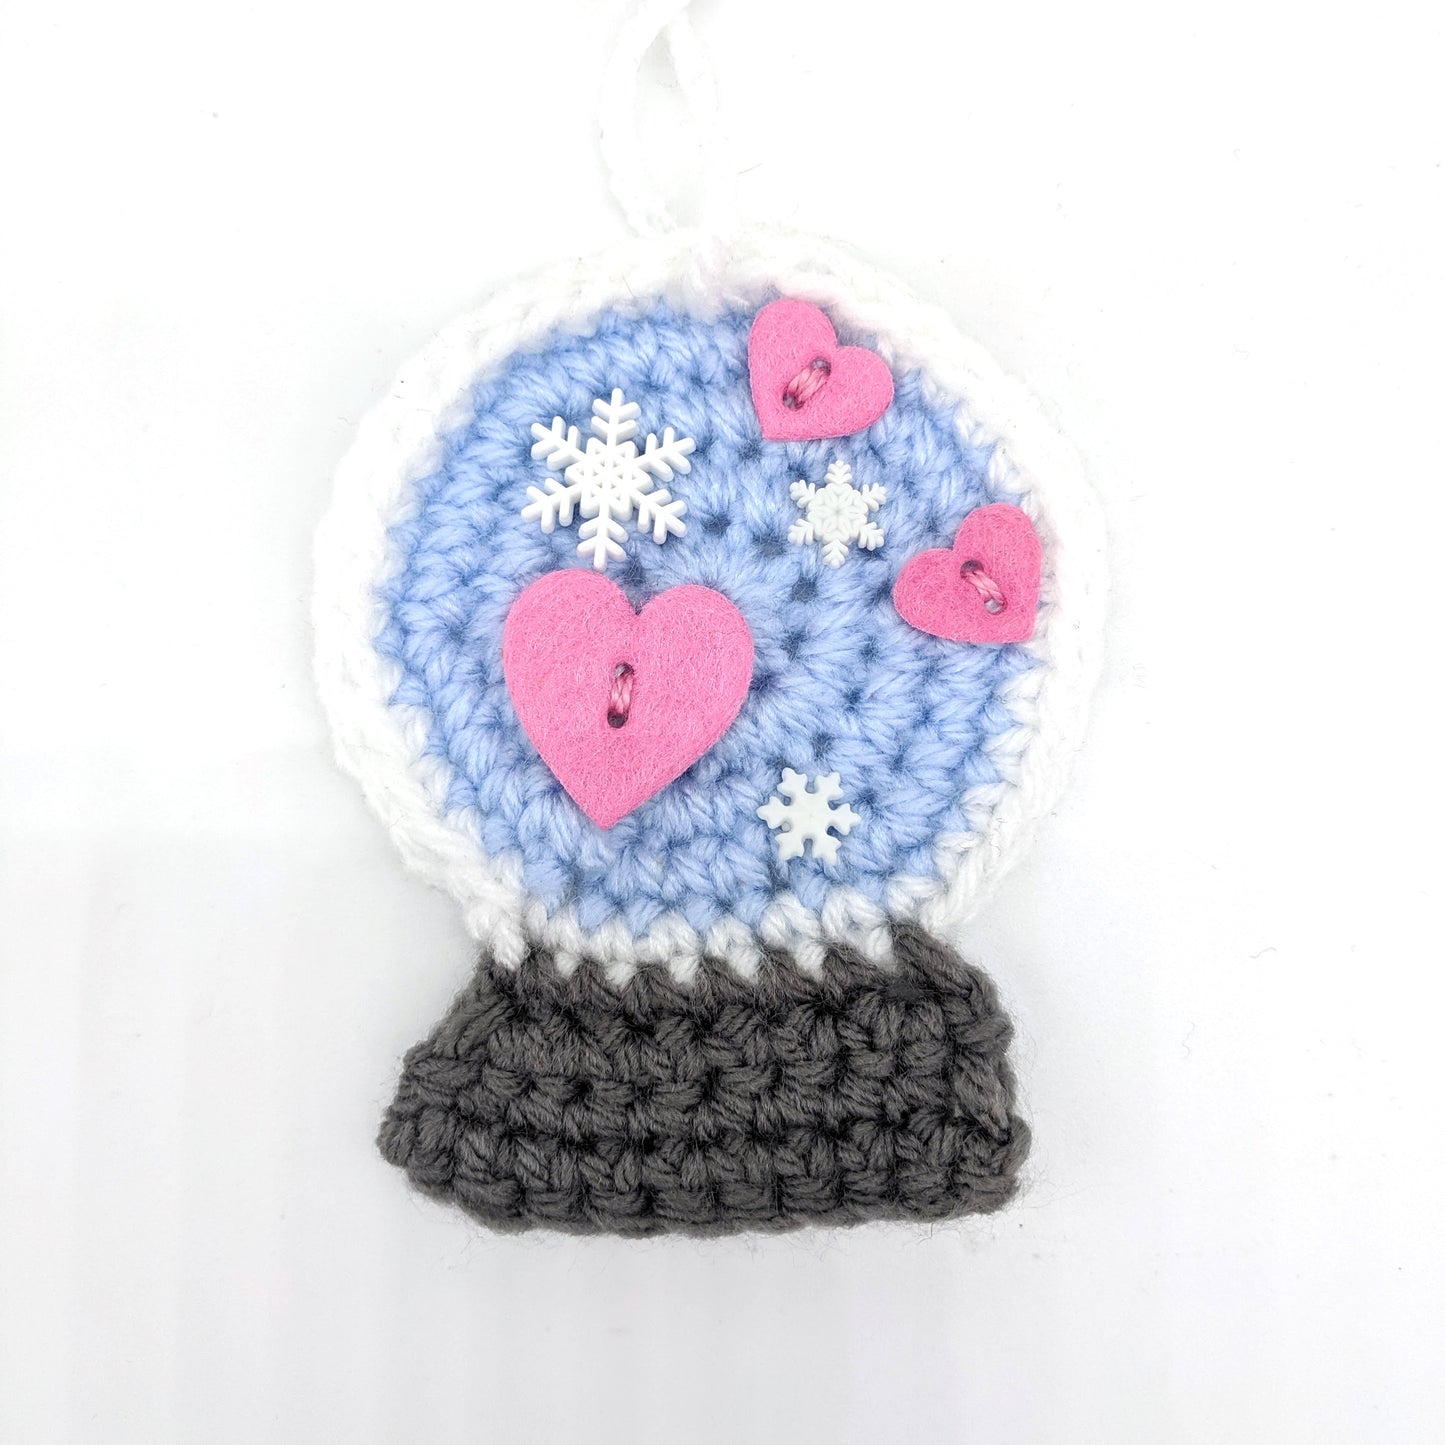 Crochet Snow Globe Ornament